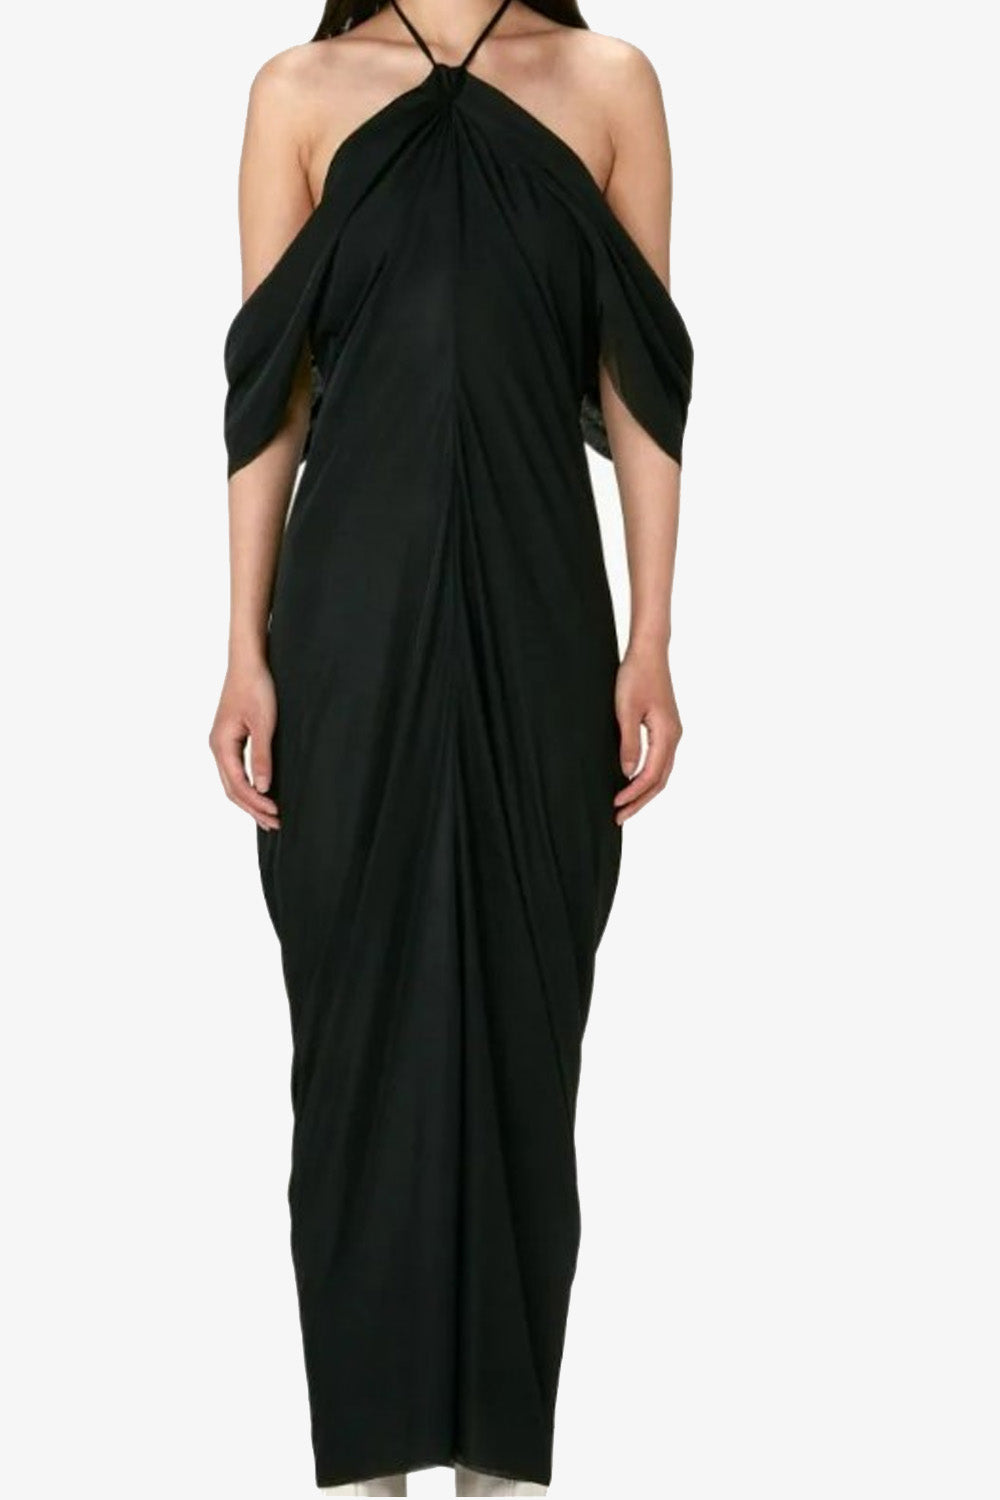 Elysian Black Dress